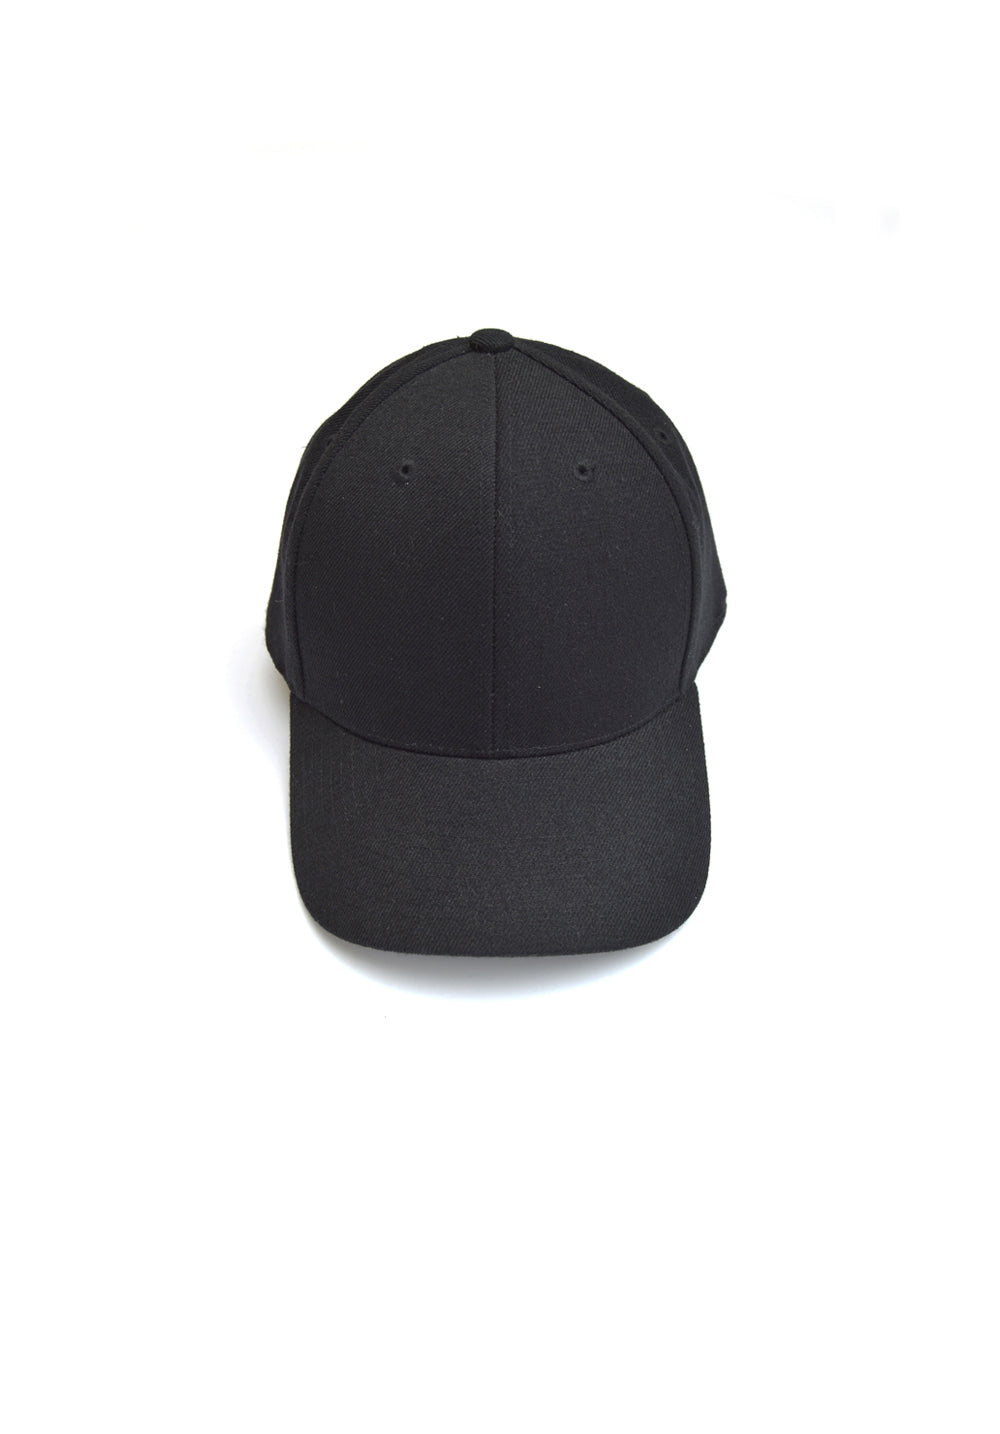 baseball cap - black - size 7 1/4